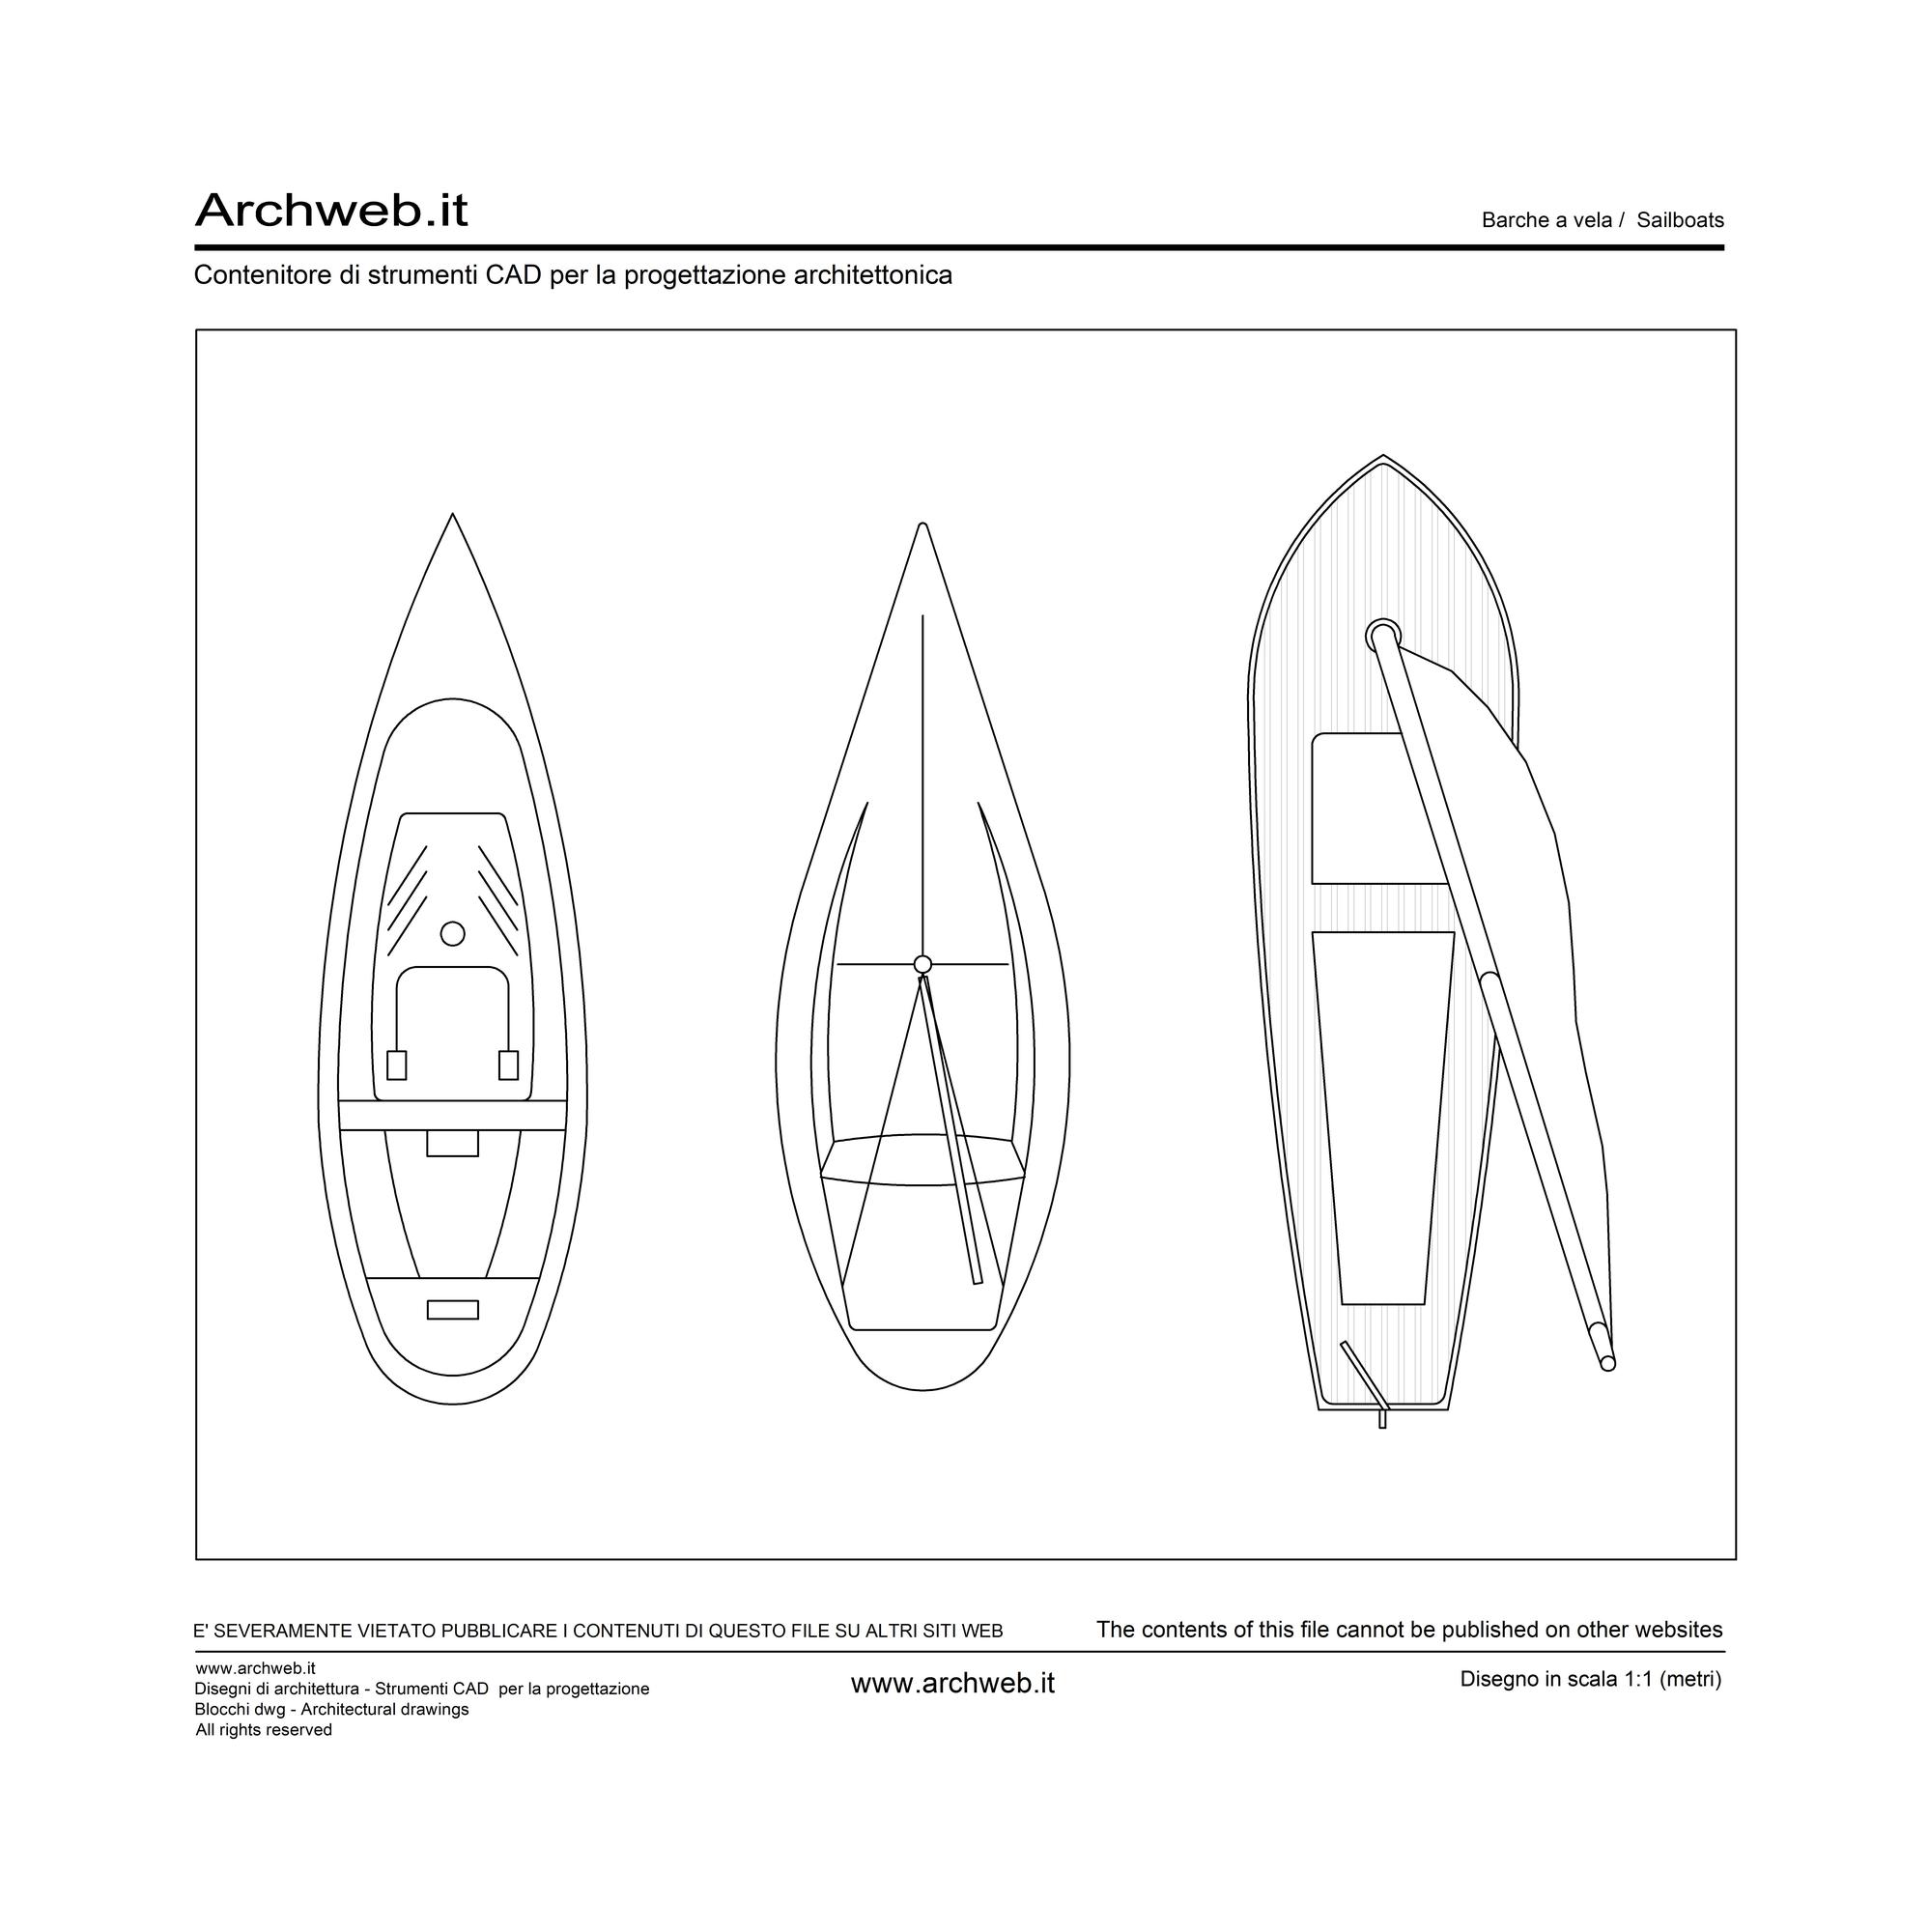 Three small sailing boats drawn in plan view